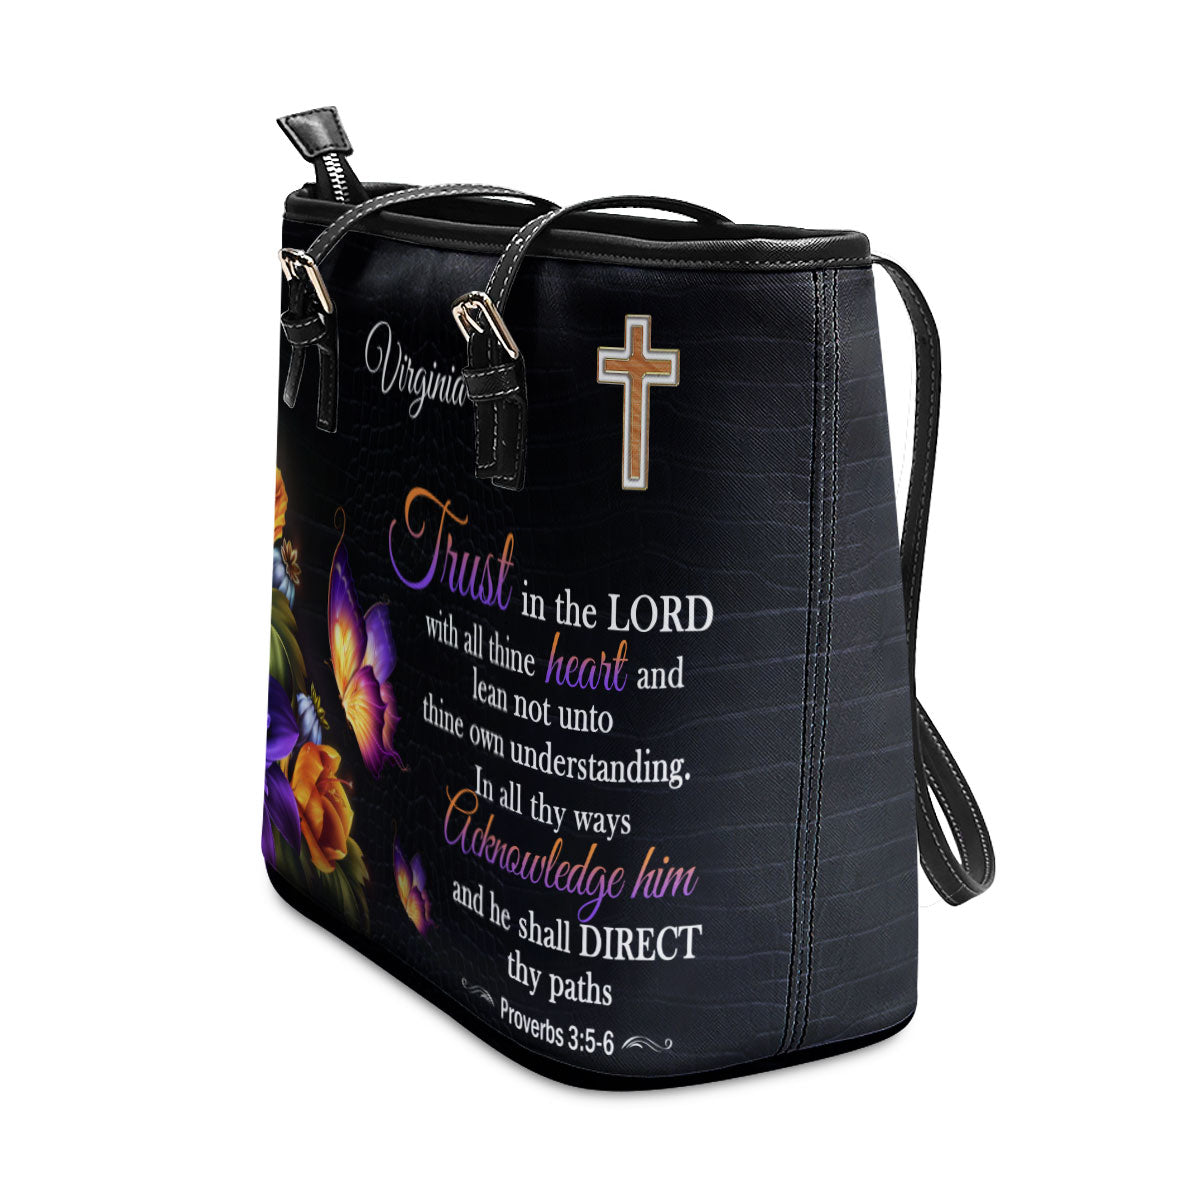 Jesuspirit Leather Bible Carrying Tote Bag